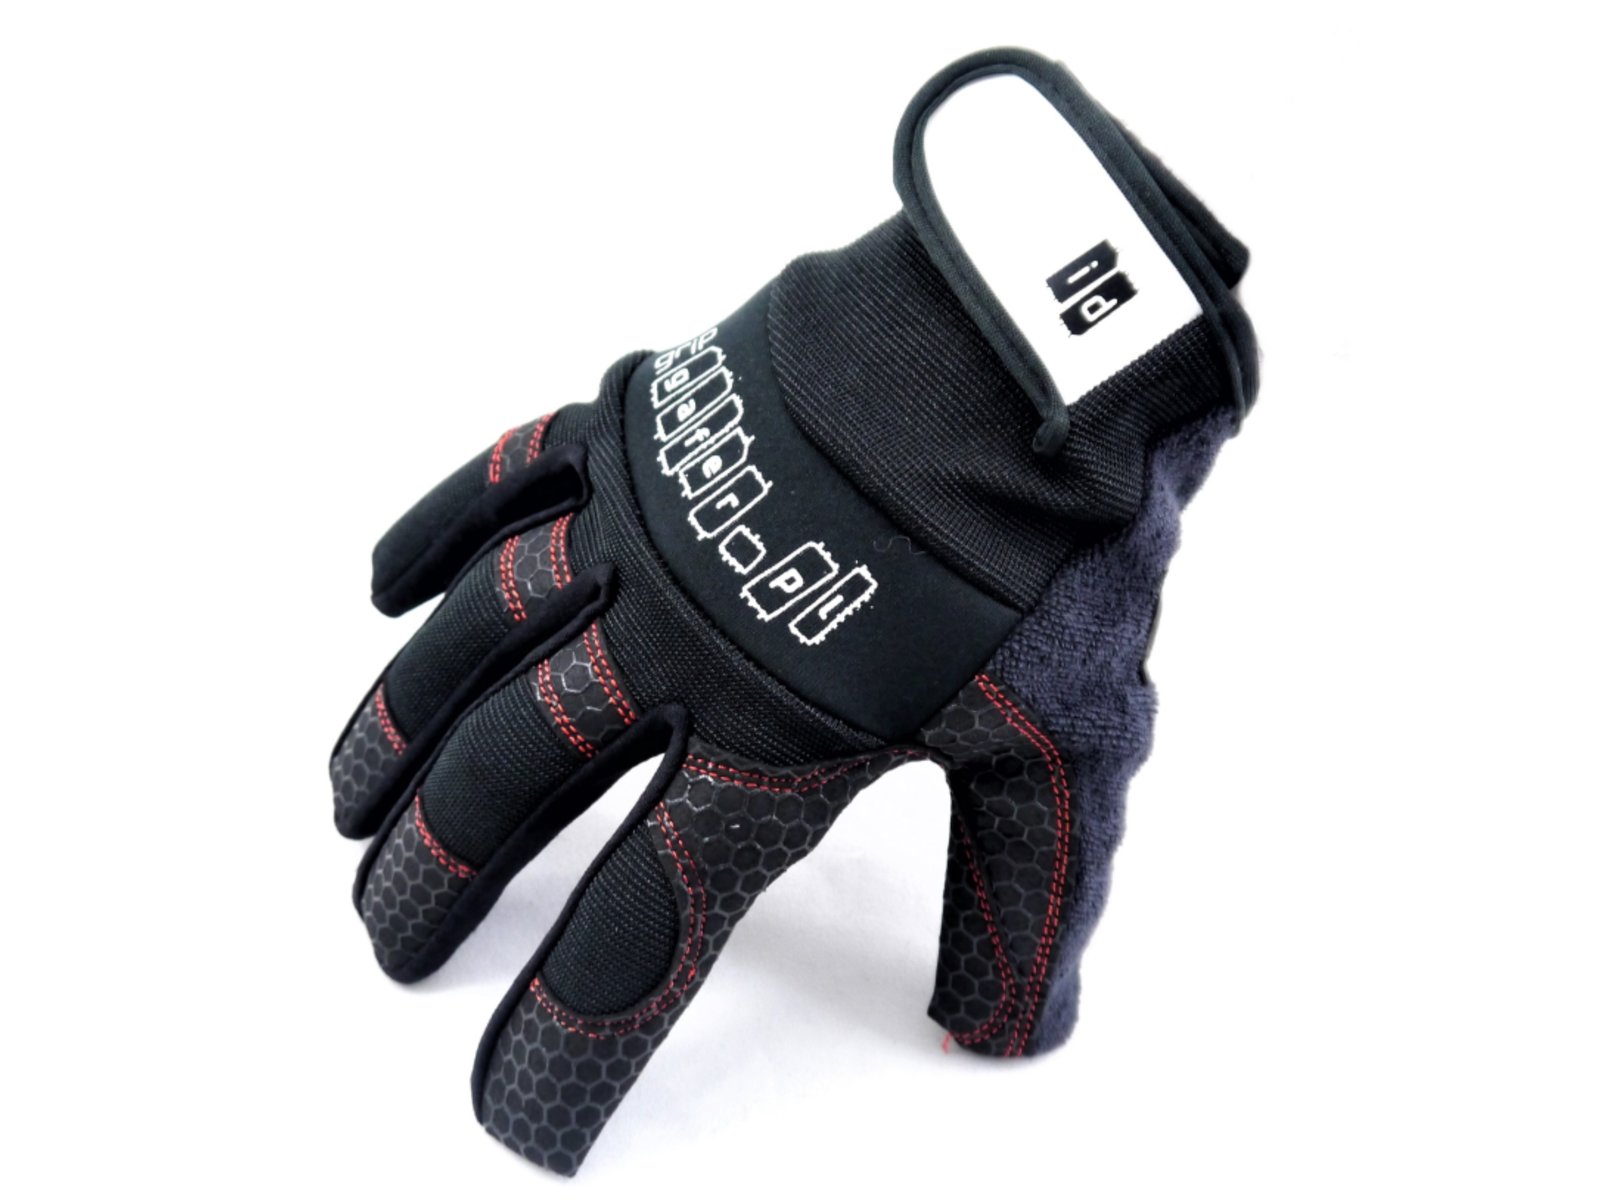 GAFER.PL Grip Glove size M | Obrázok 1 | eplay.sk